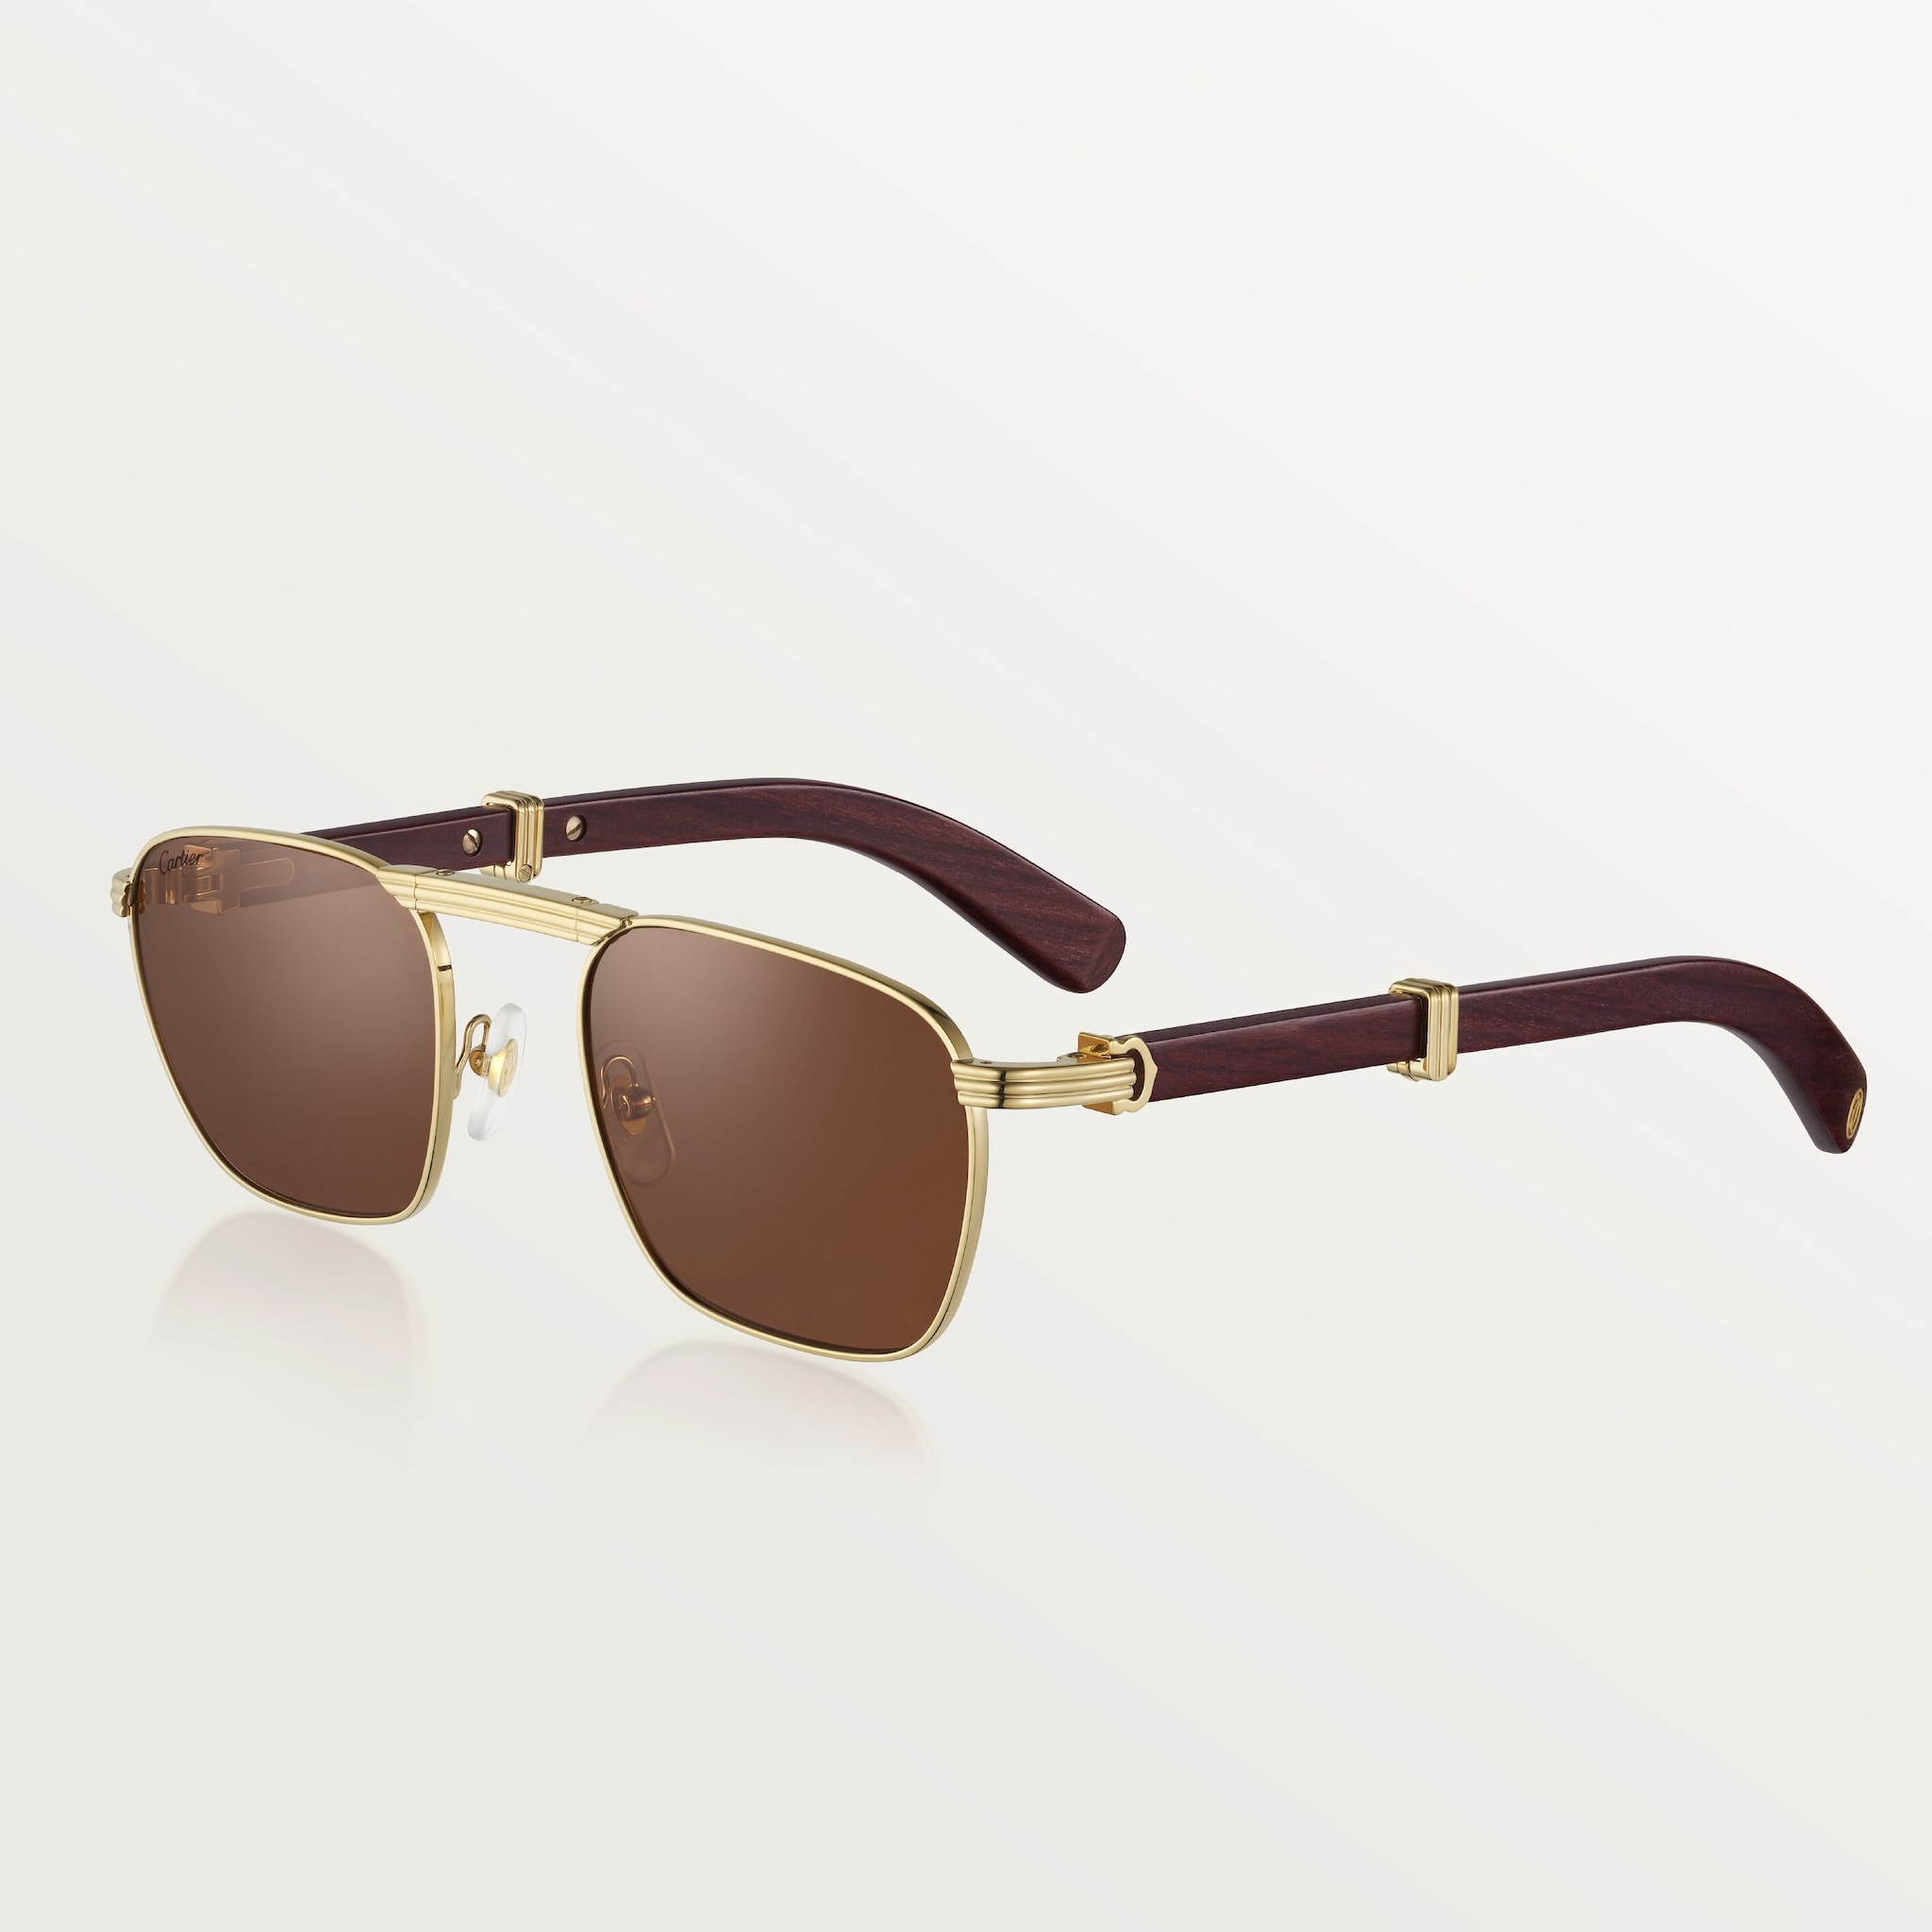 Première de Cartier sunglassesSmooth golden-finish metal, brown lenses